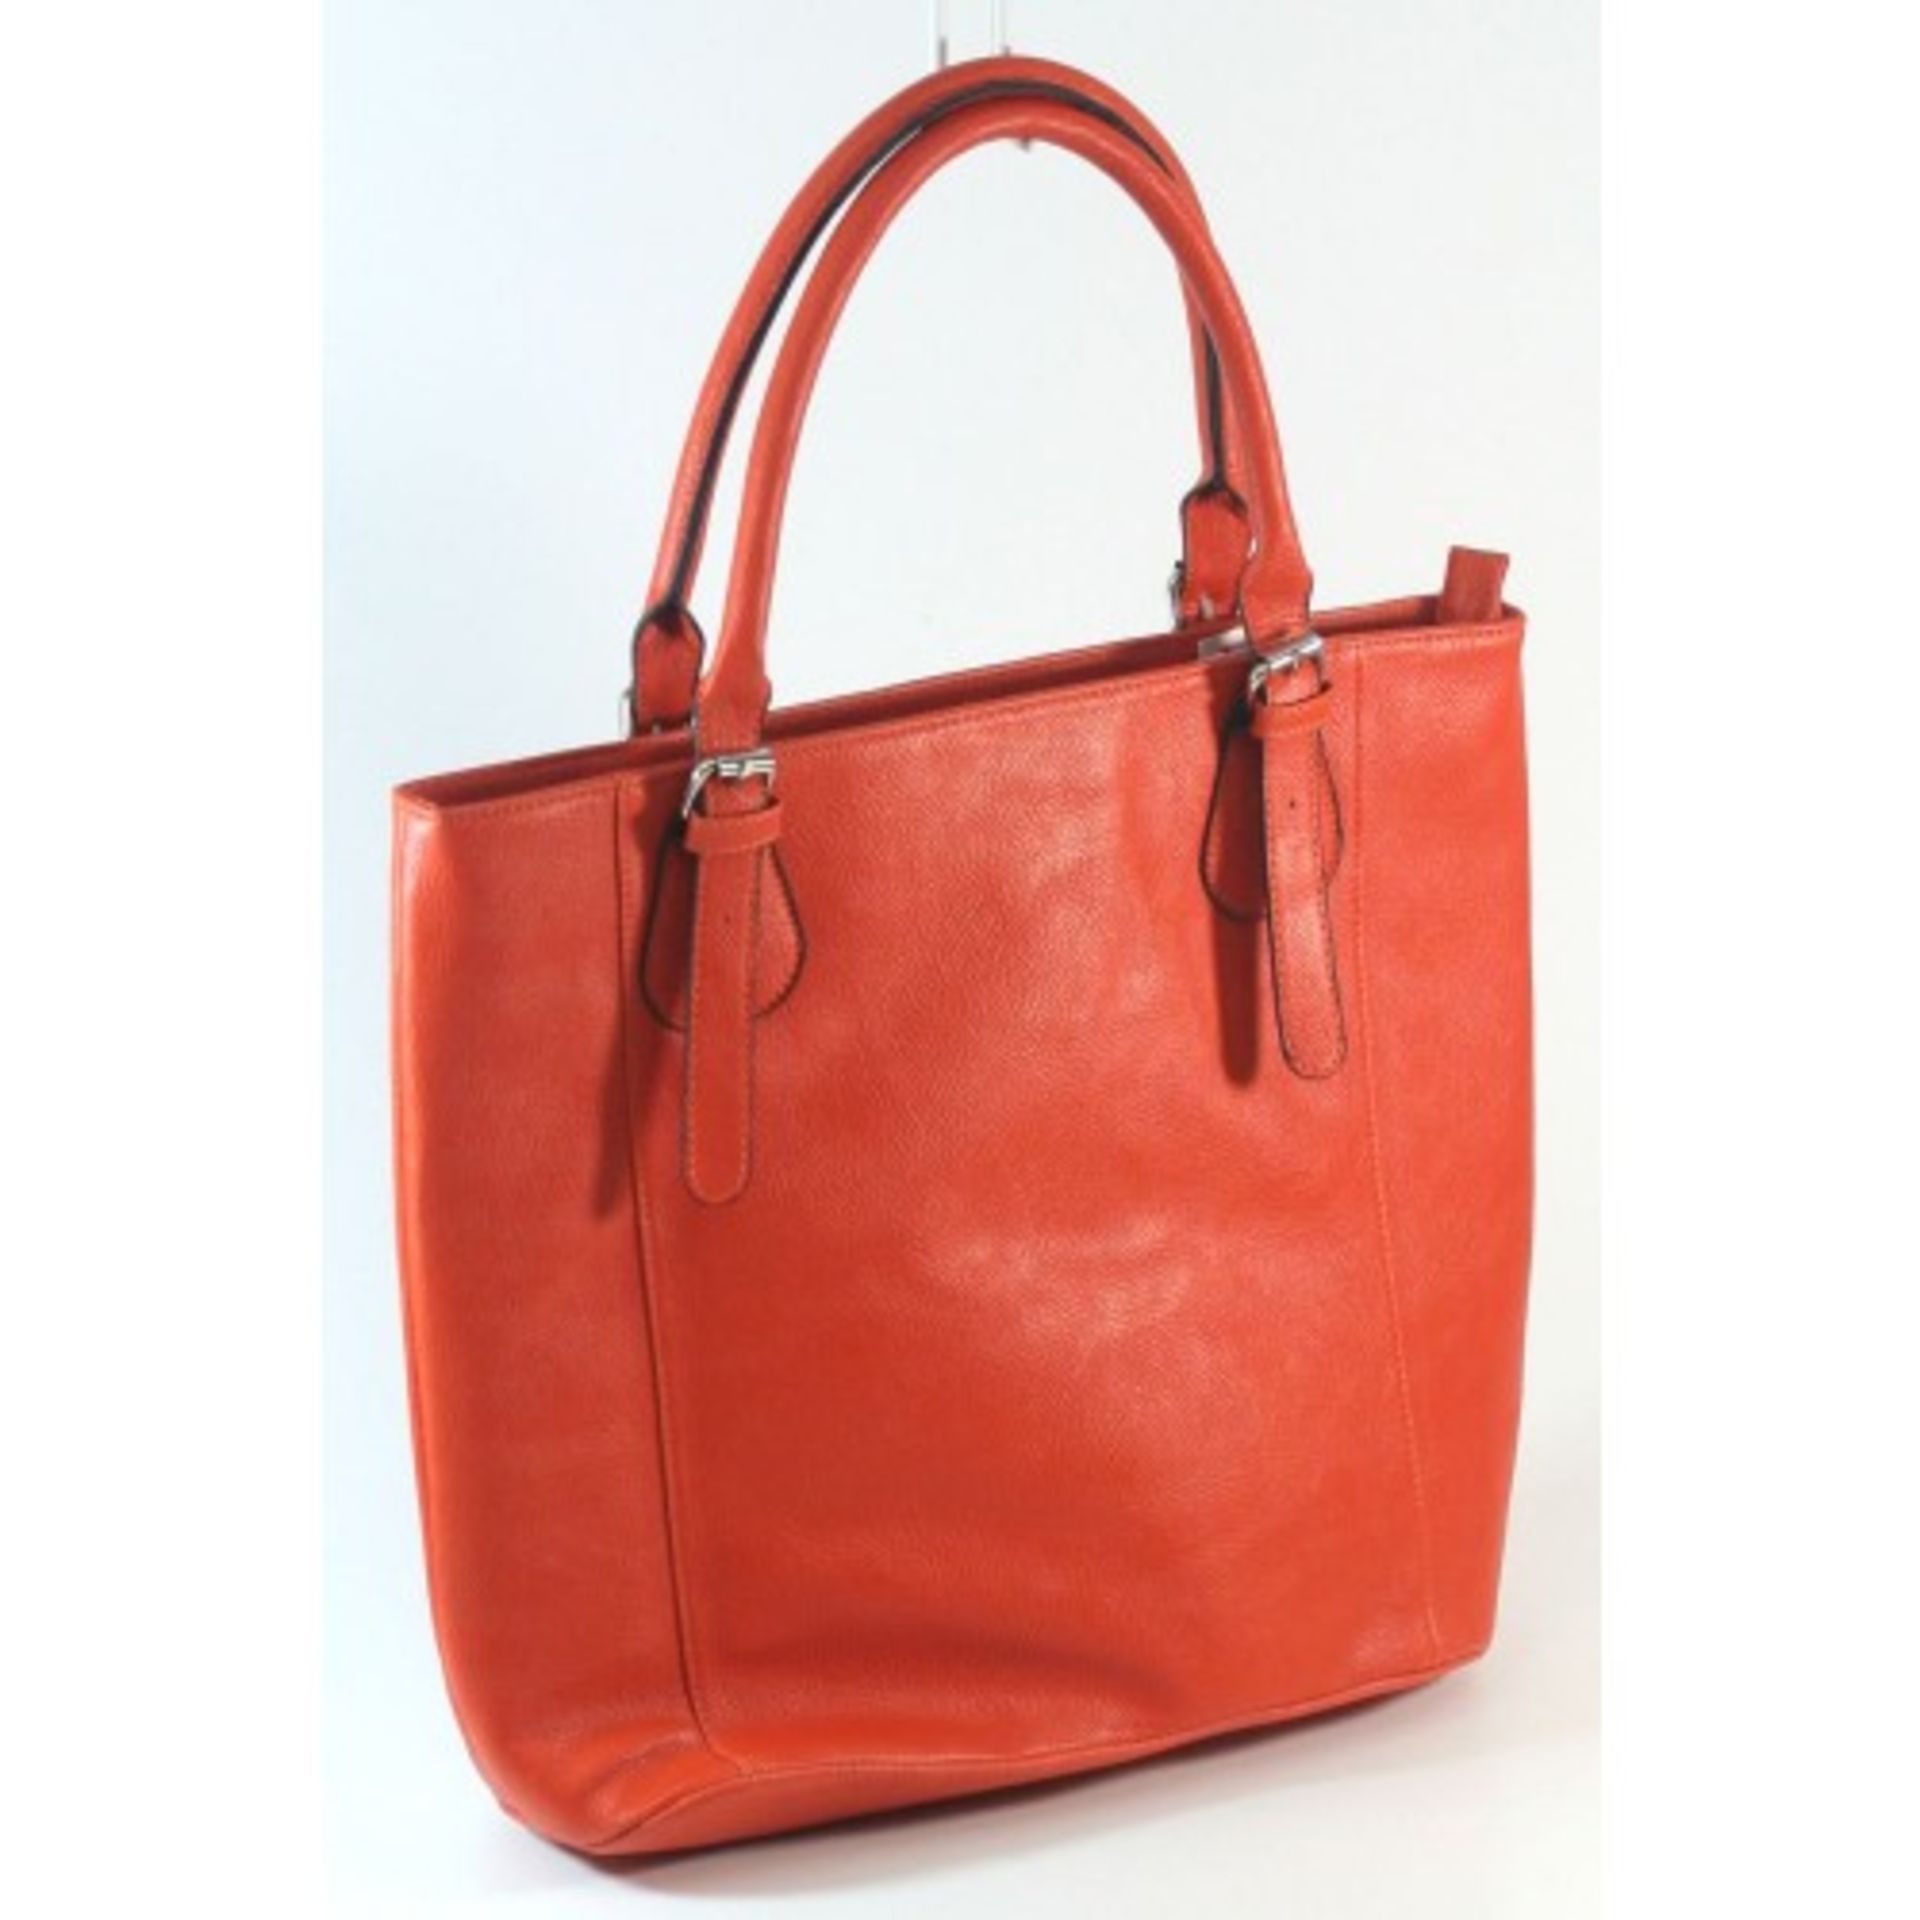 V Brand New Ladies Thomas Calvi Paige Orange Handbag X 2 YOUR BID PRICE TO BE MULTIPLIED BY TWO